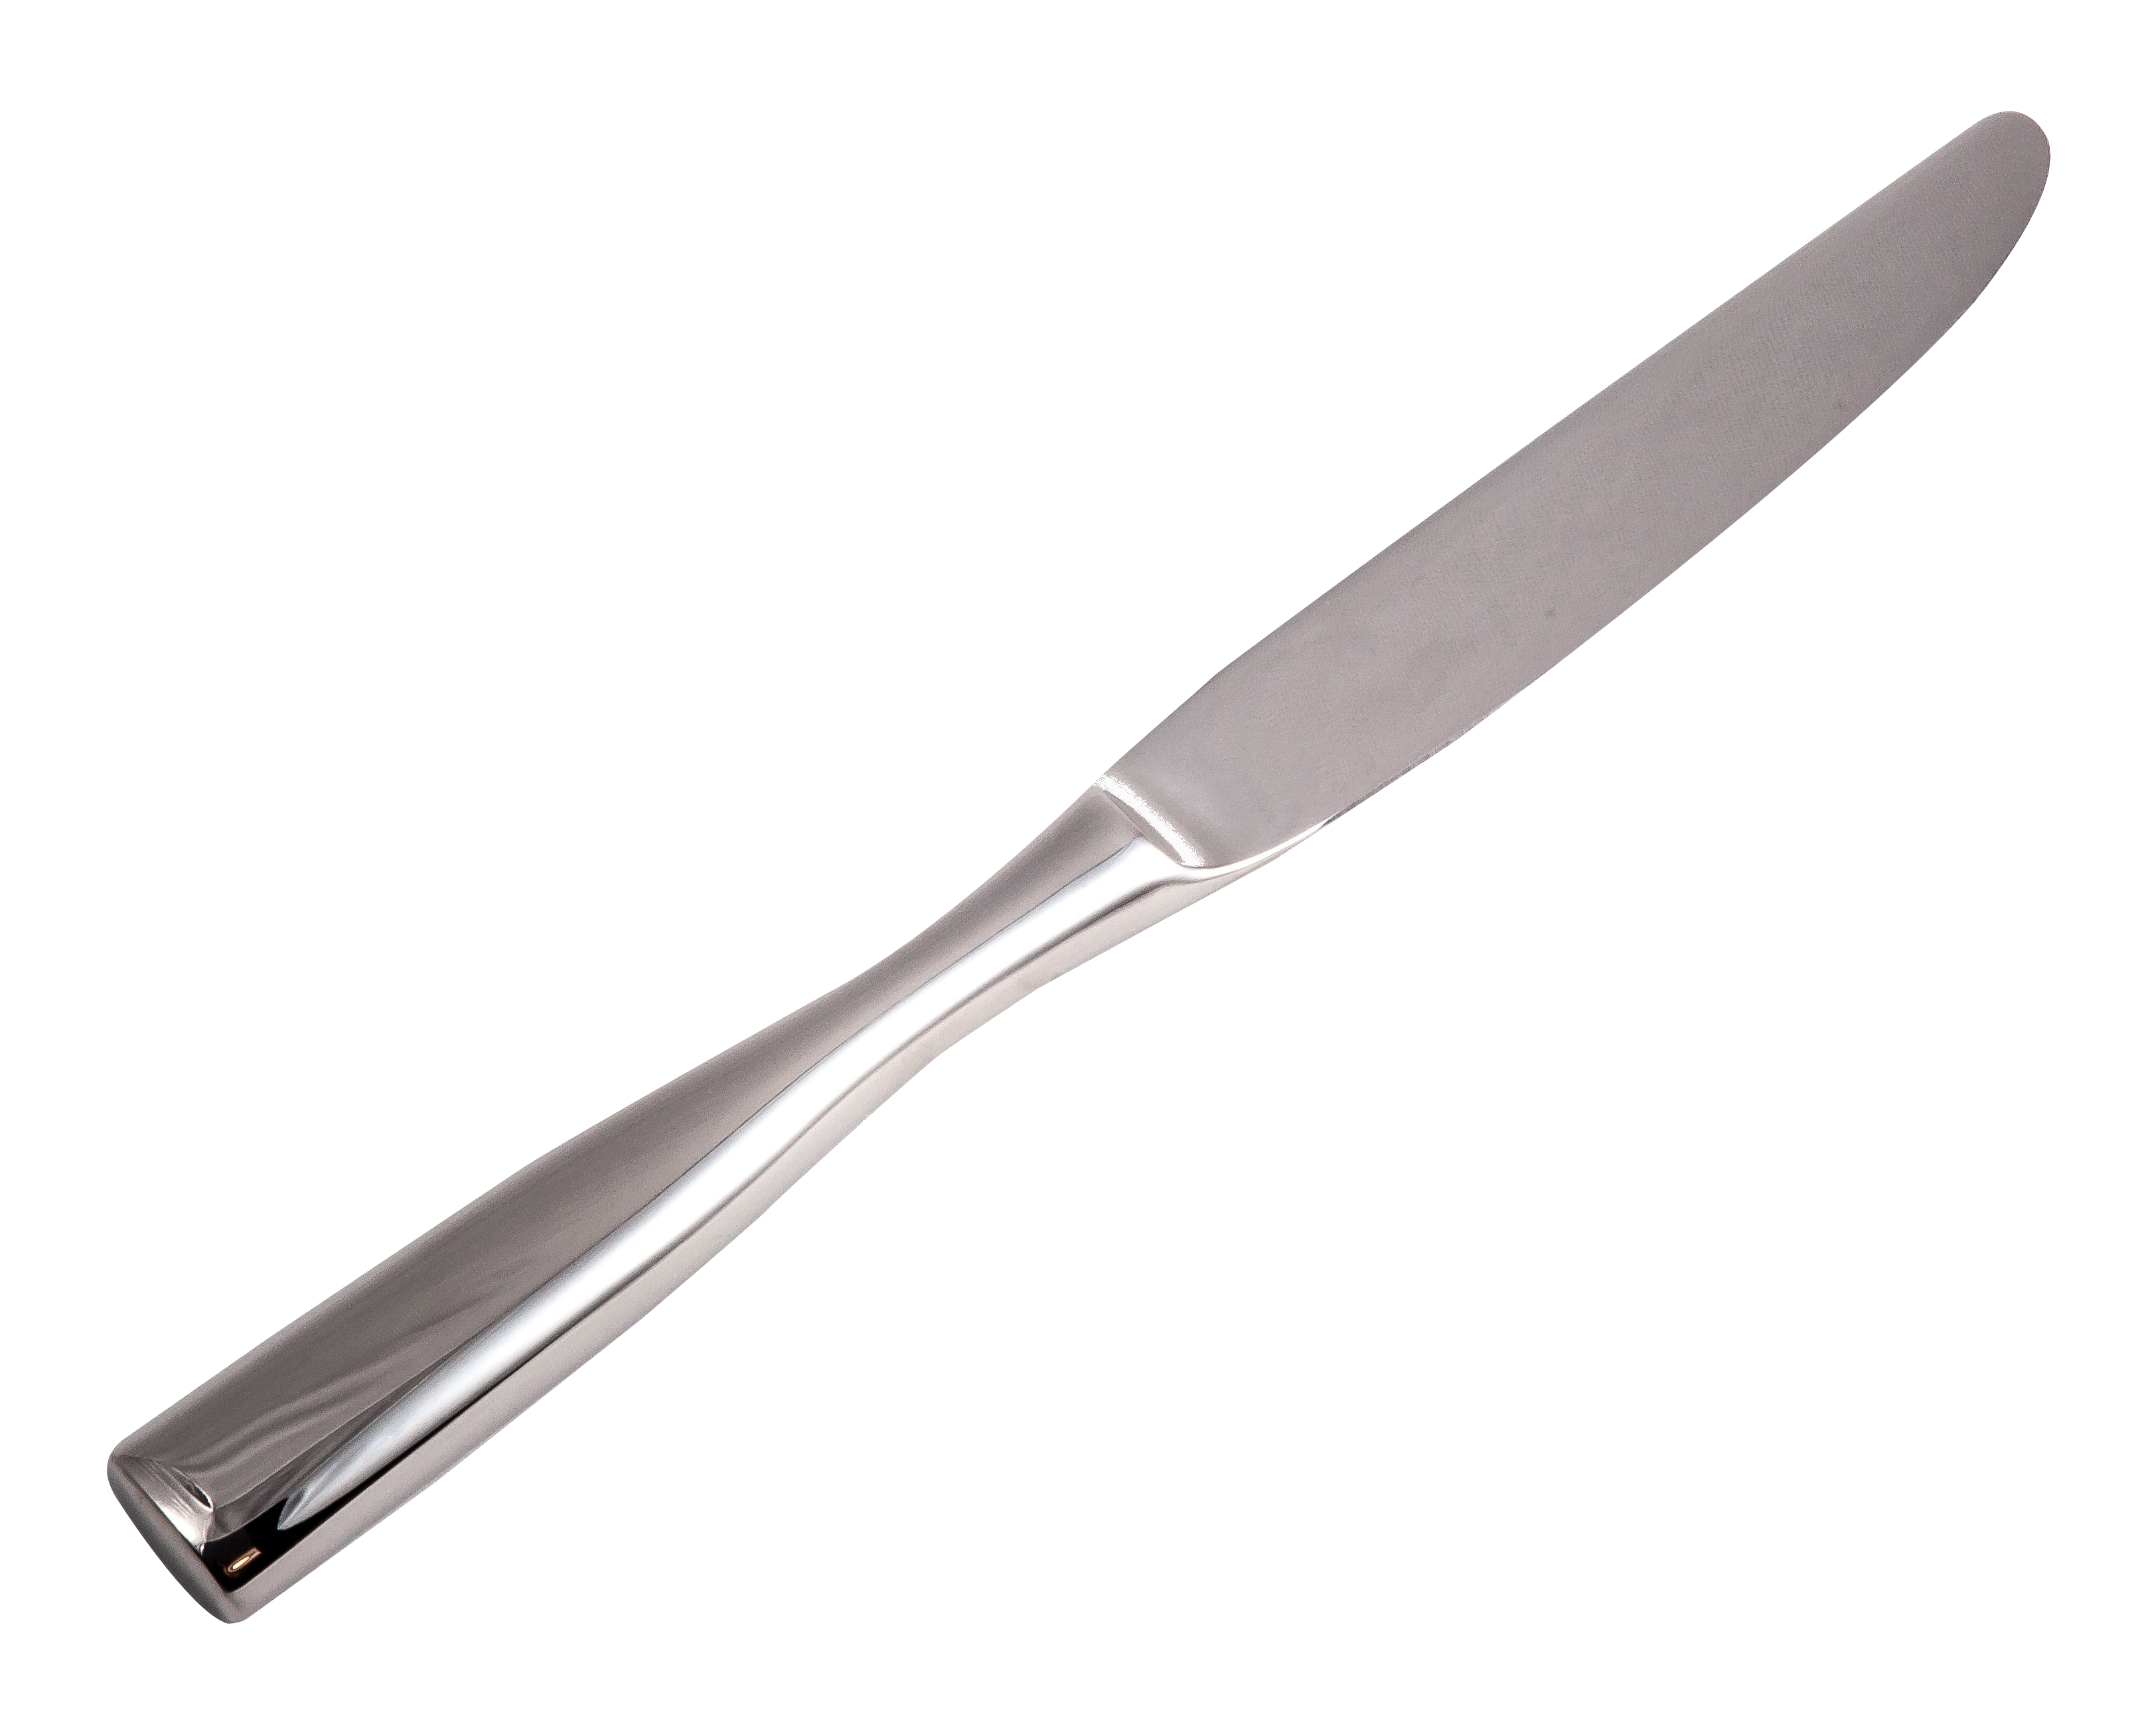 Knife Png Transparent - Knife, Transparent background PNG HD thumbnail